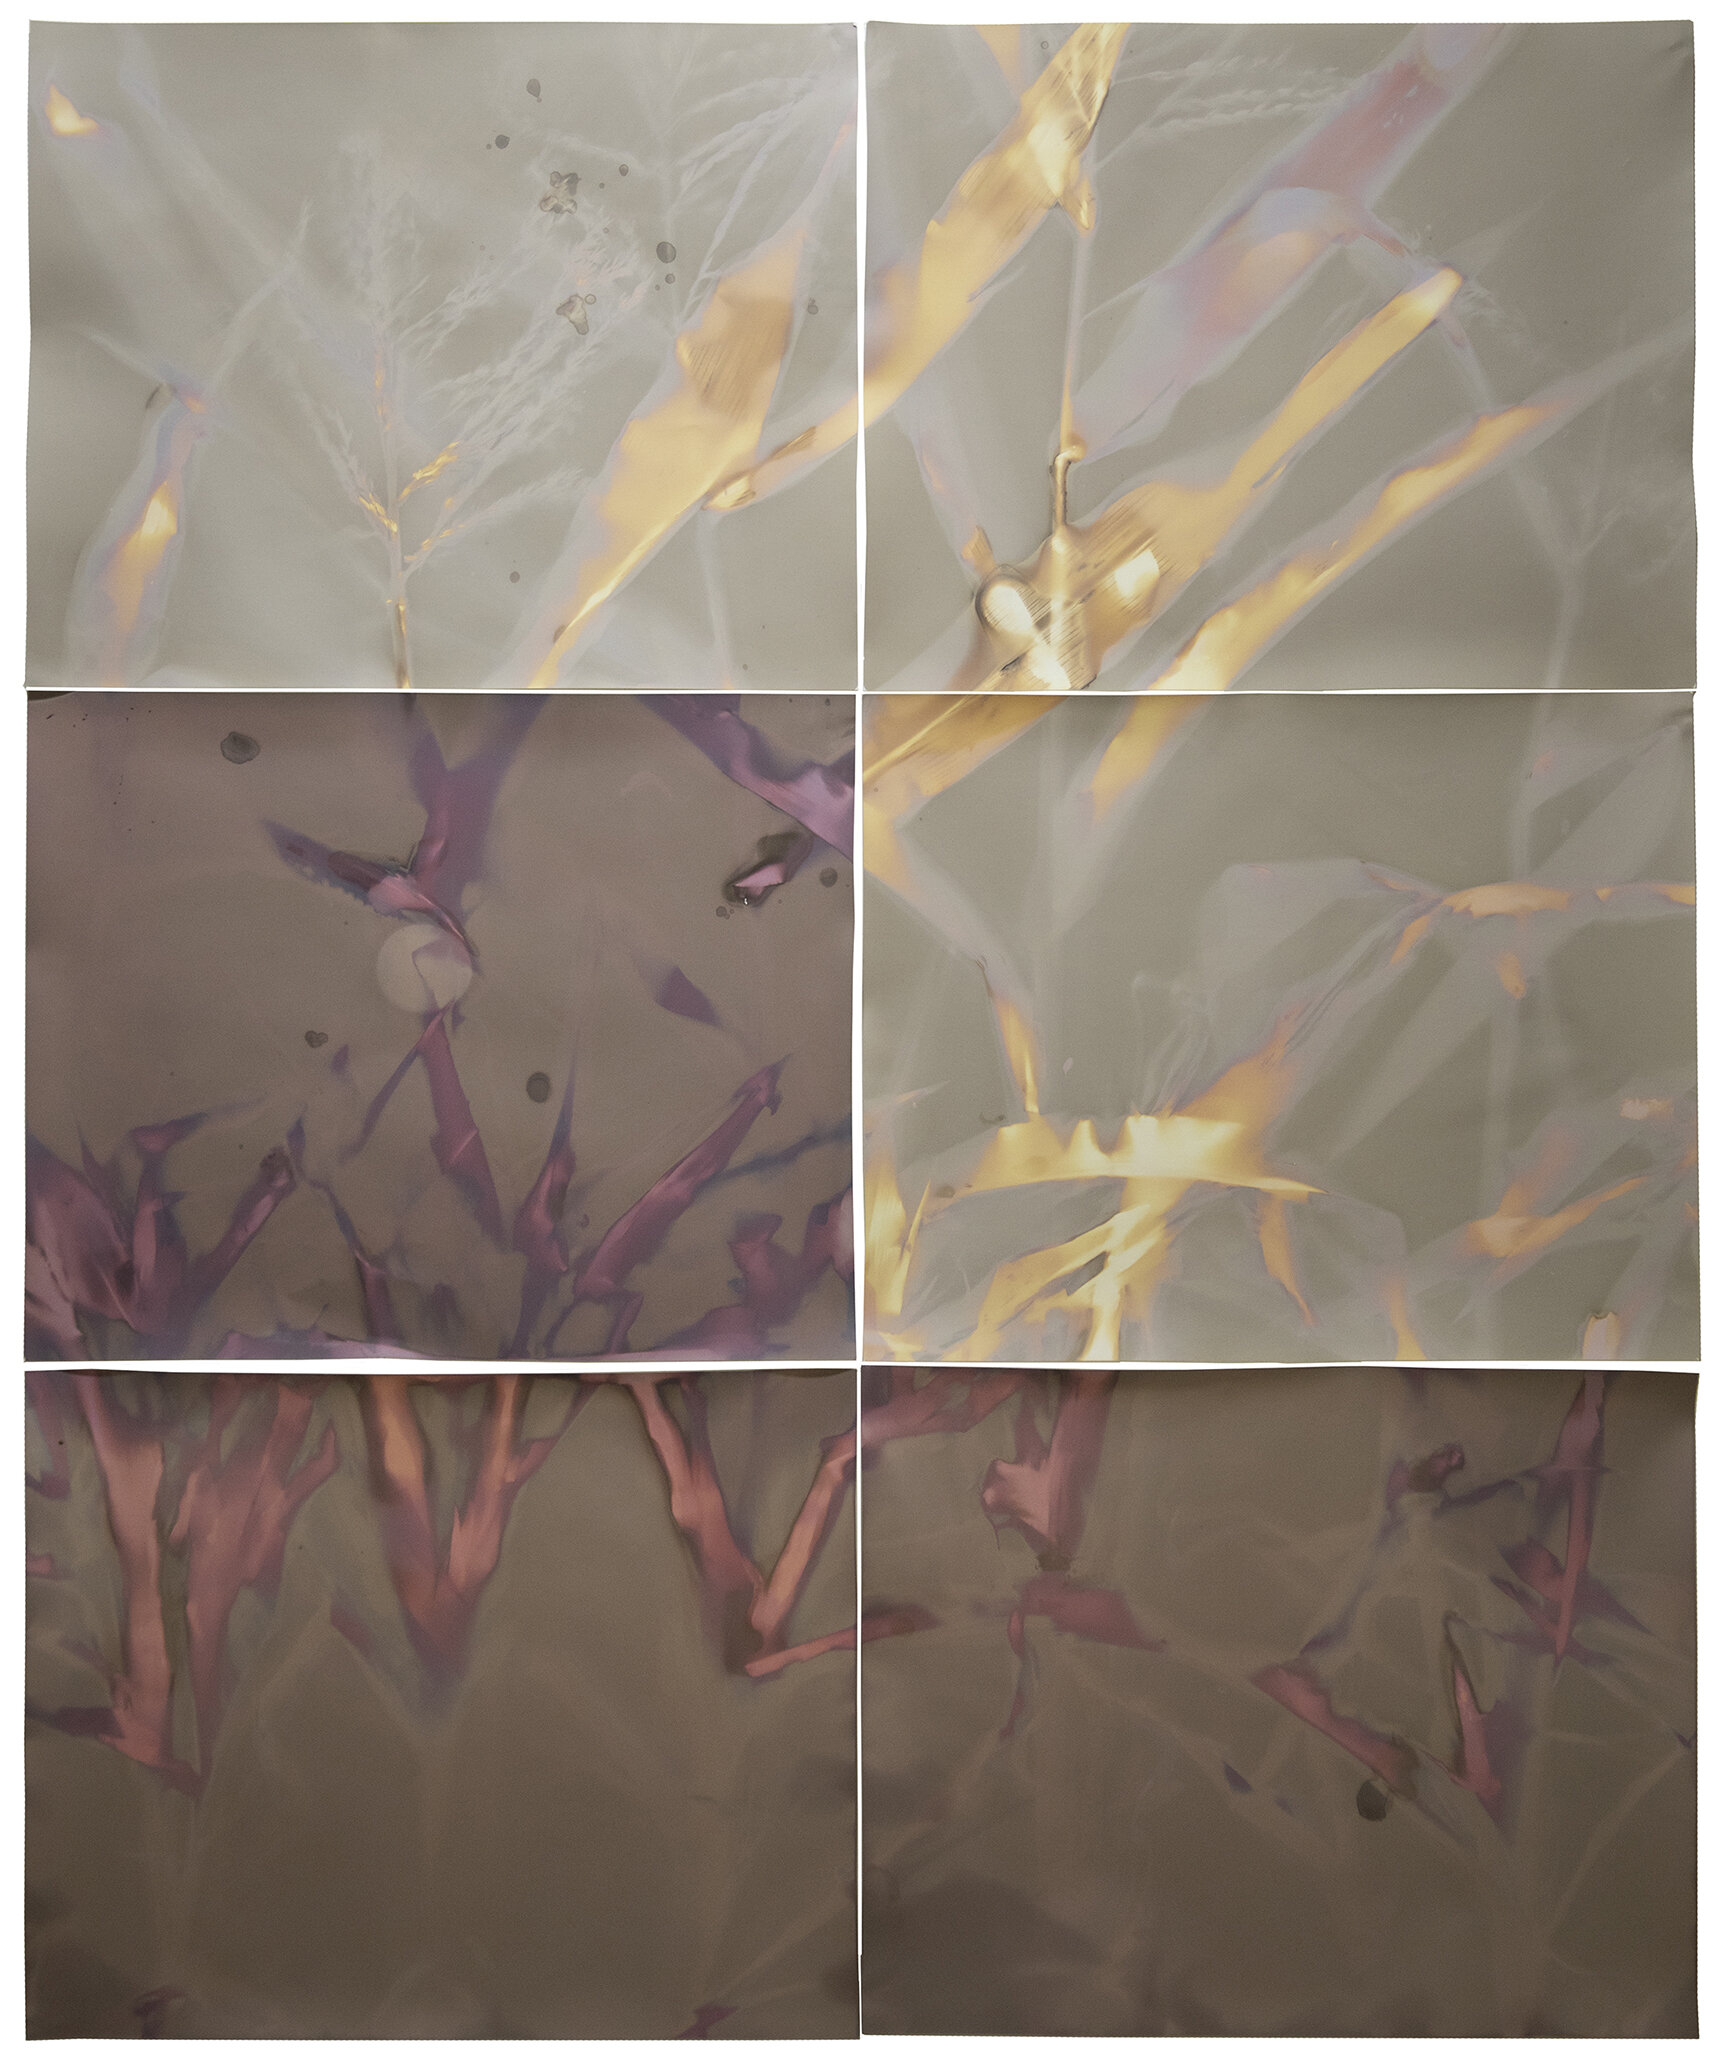  cornfield #4 2019  40” x 48”   lumen prints 